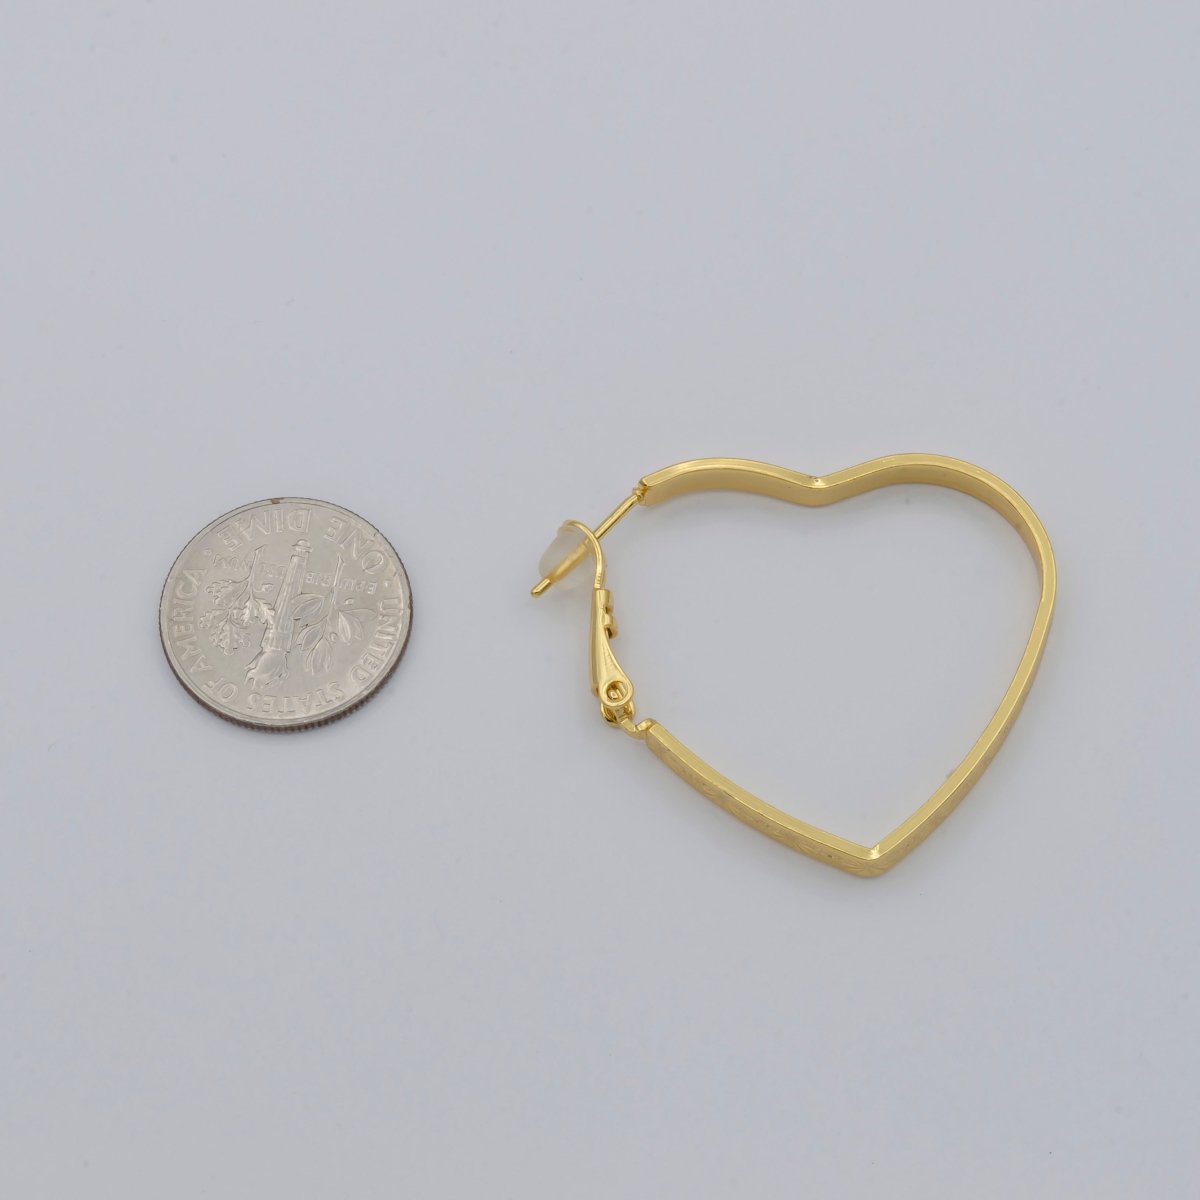 Simple Designated Golden Heart Huggies Earrings, Plain Gold Filled Tiny Geometric Love Heart Shape Casual Daily Wear Earring Jewelry P-098 P-099 P-100 - DLUXCA